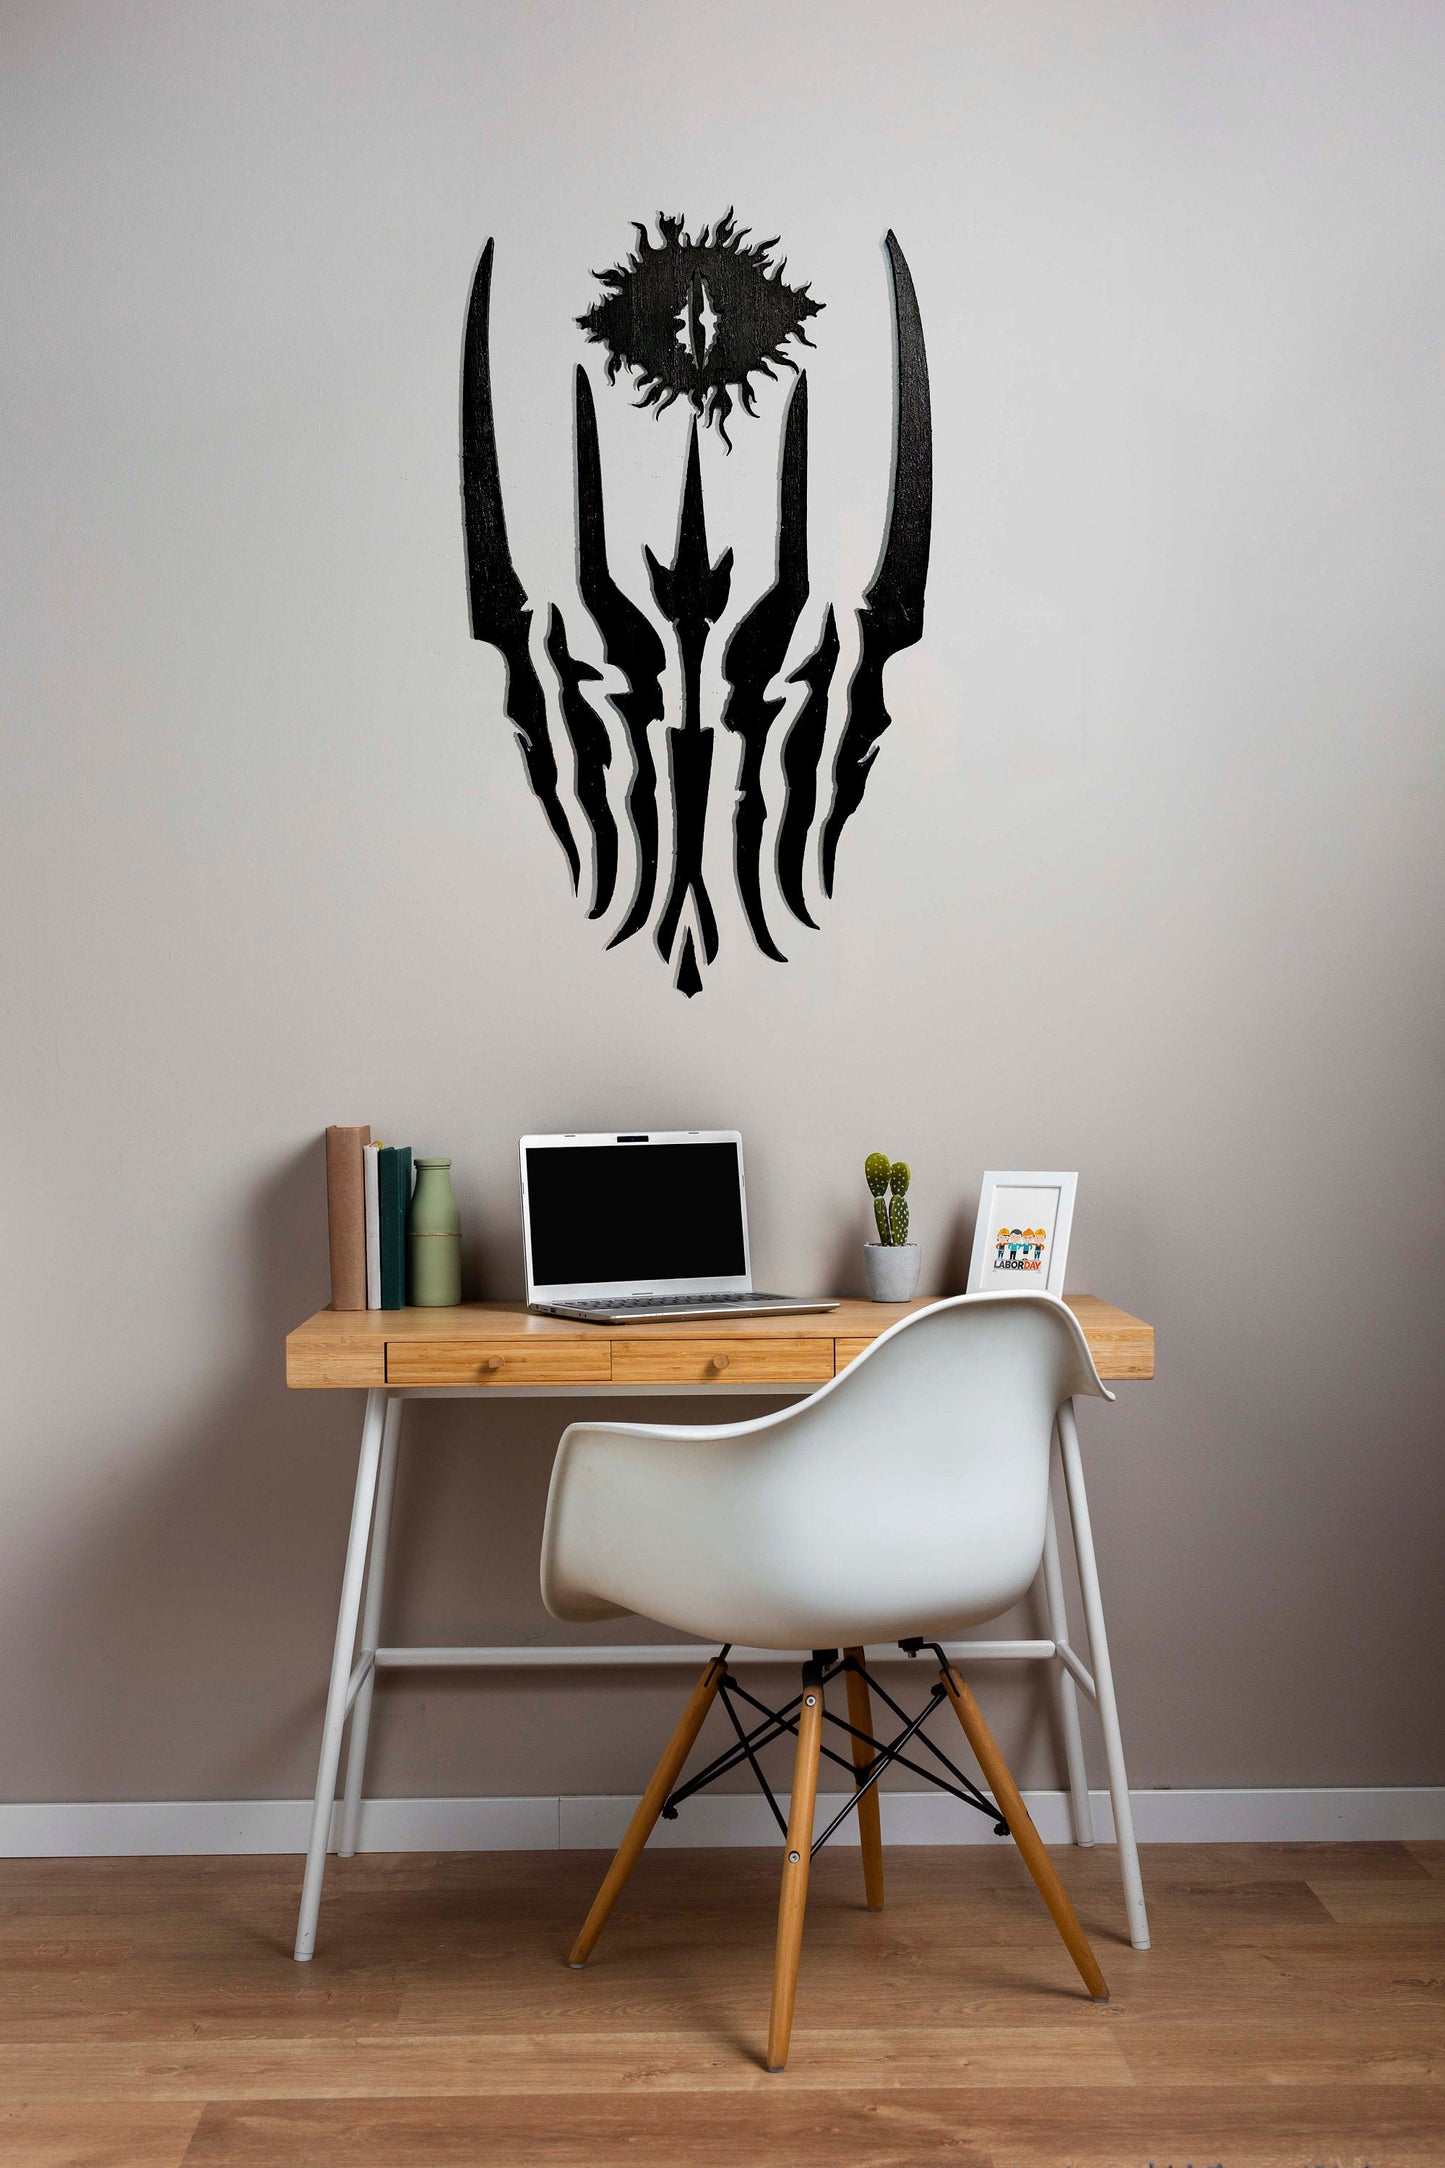 Unik4art - Wooden wall art home decor, Sauron wall art decoration, living room bedroom nursery morden decor